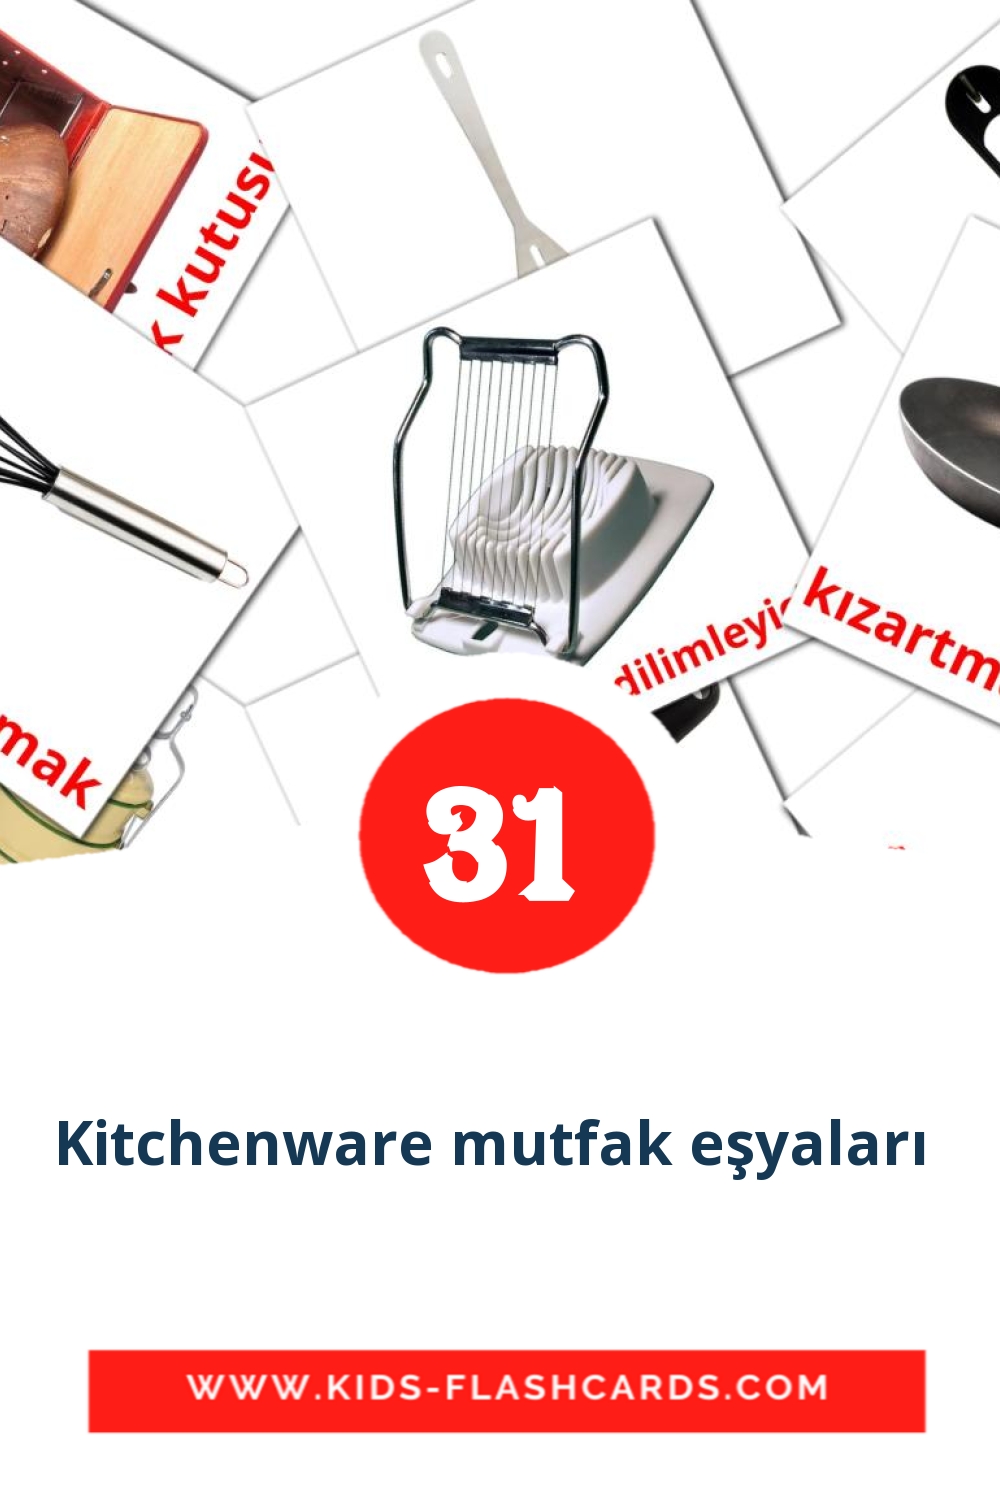 Kitchenware mutfak eşyaları  на турецком для Детского Сада (35 карточек)